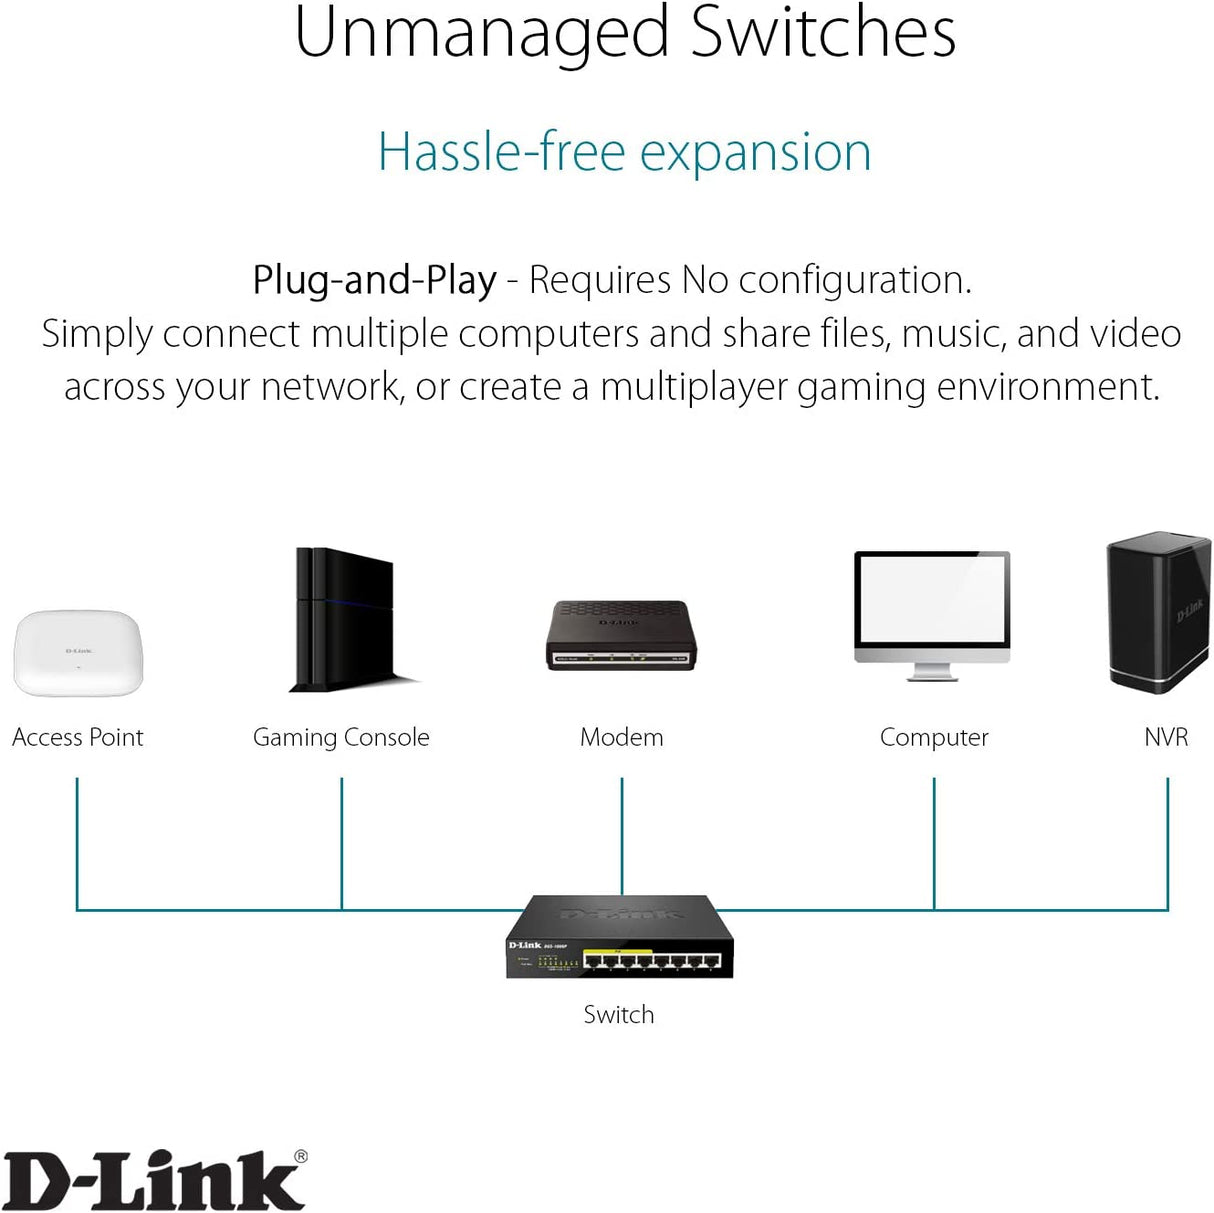 D-Link PoE Switch, 8 Port Ethernet Gigabit Unmanaged Desktop Switch with 4 PoE Ports 68W Budget (DGS-1008P),Black 8-Port PoE Gigabit